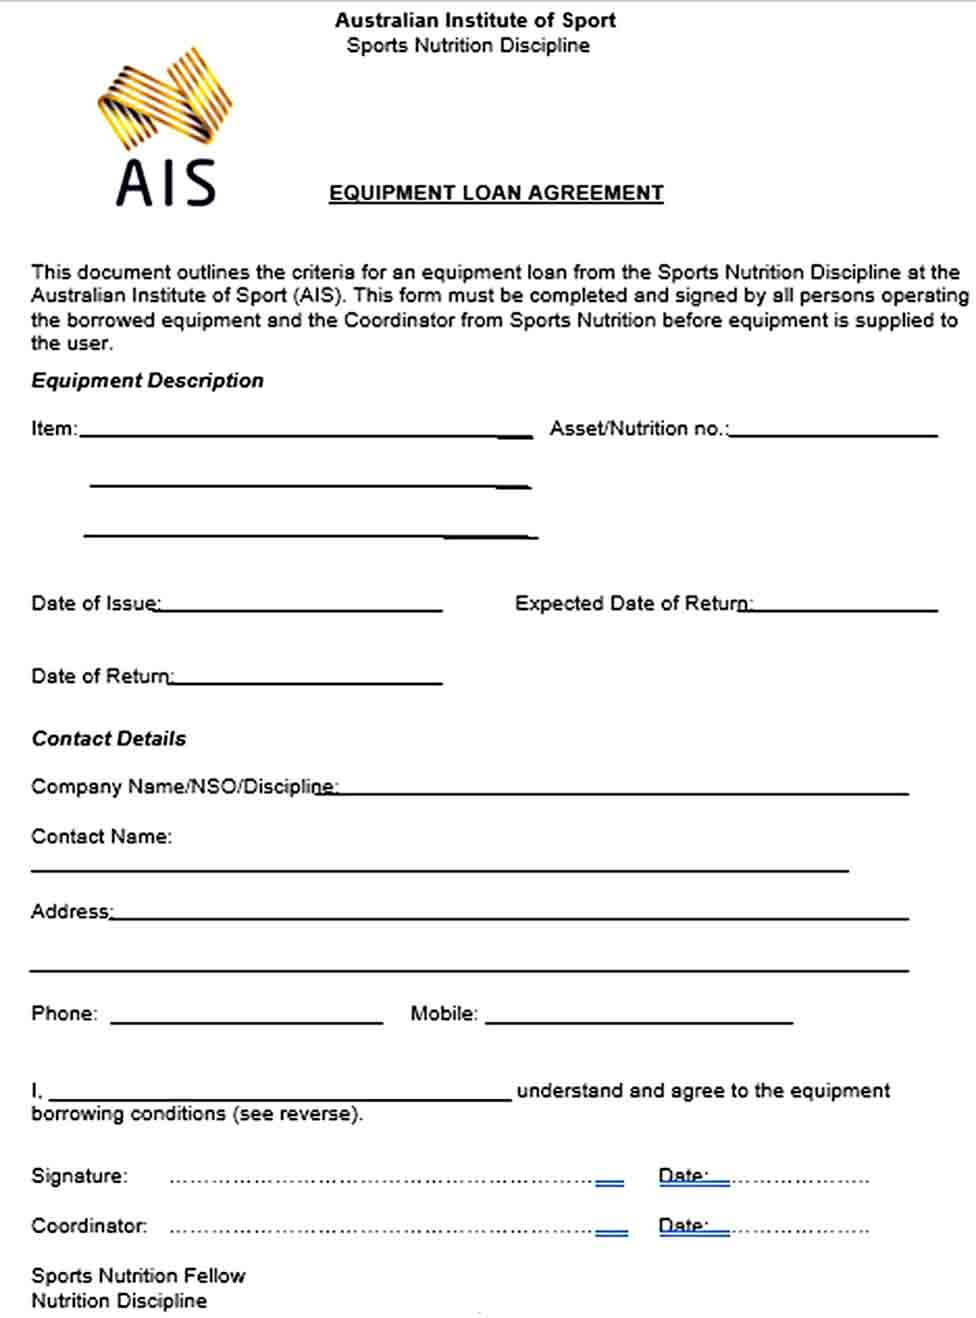 Sample Sports Nutrition Equipment Loan Agreement